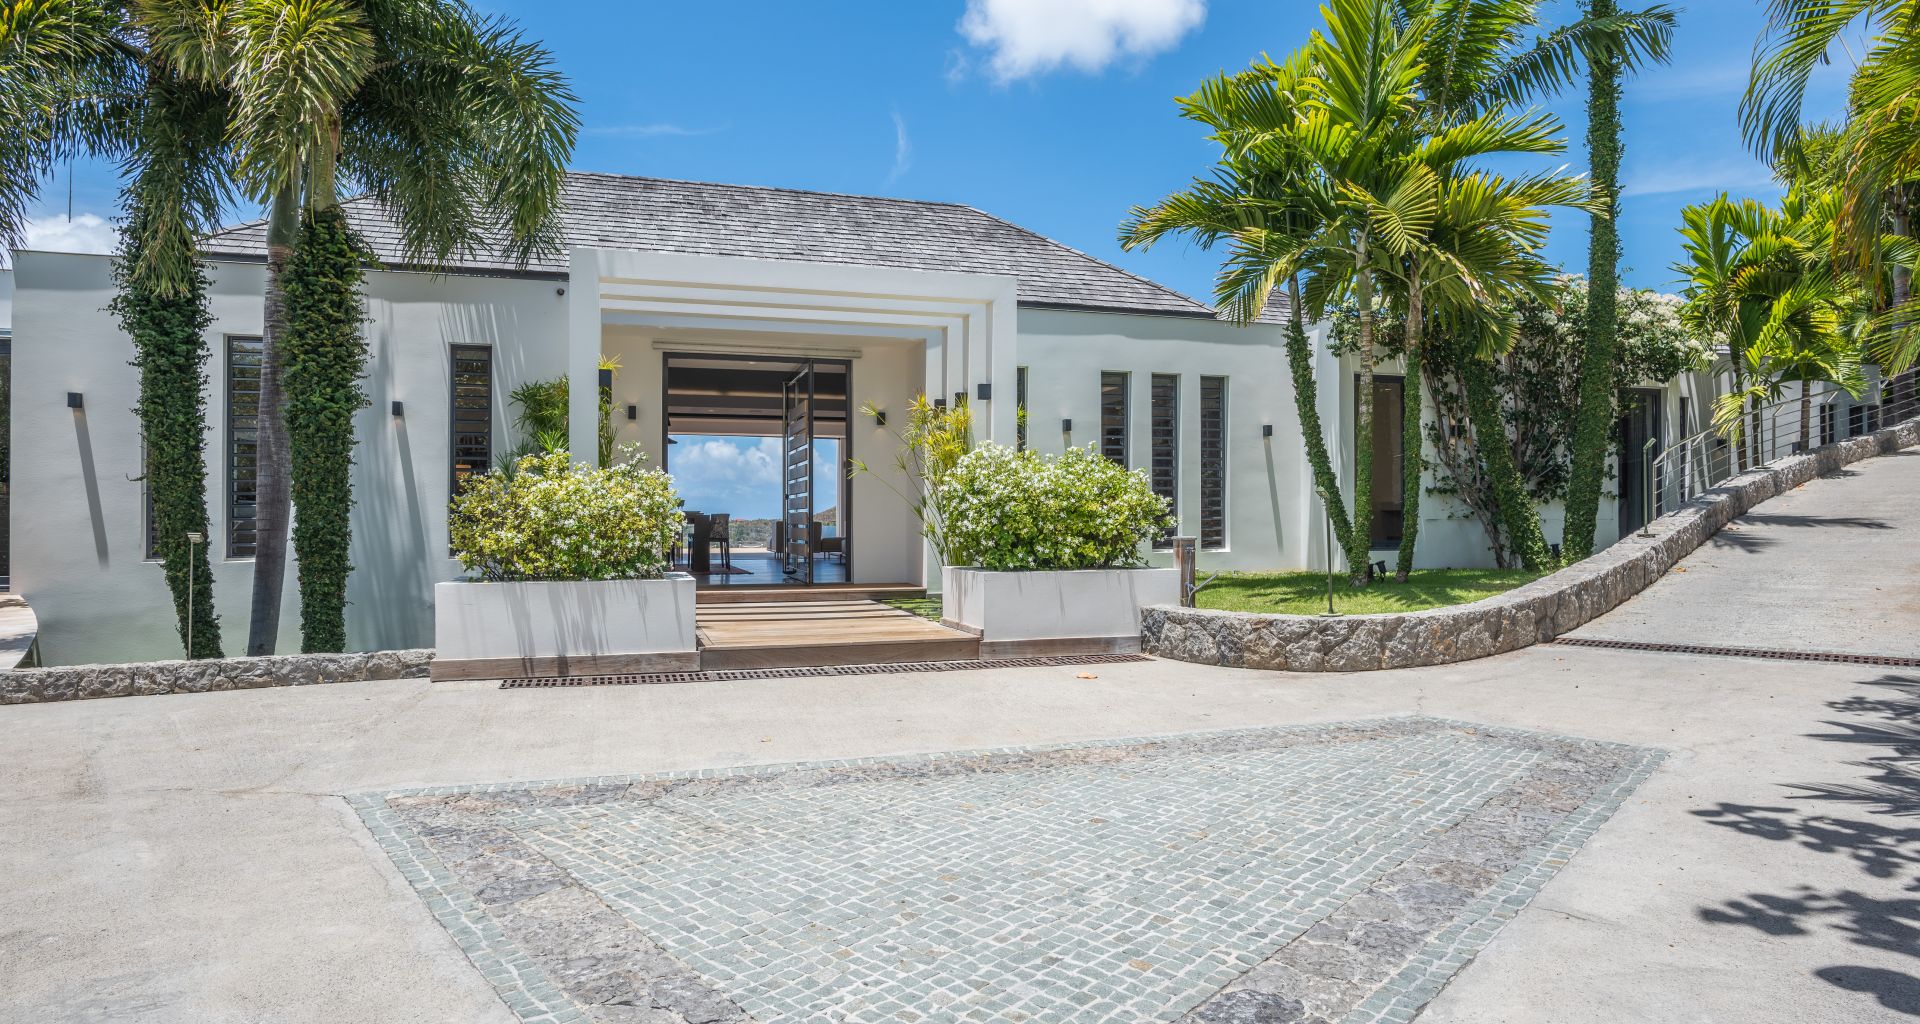 Villa Bastide, St-Barts, Caribbean